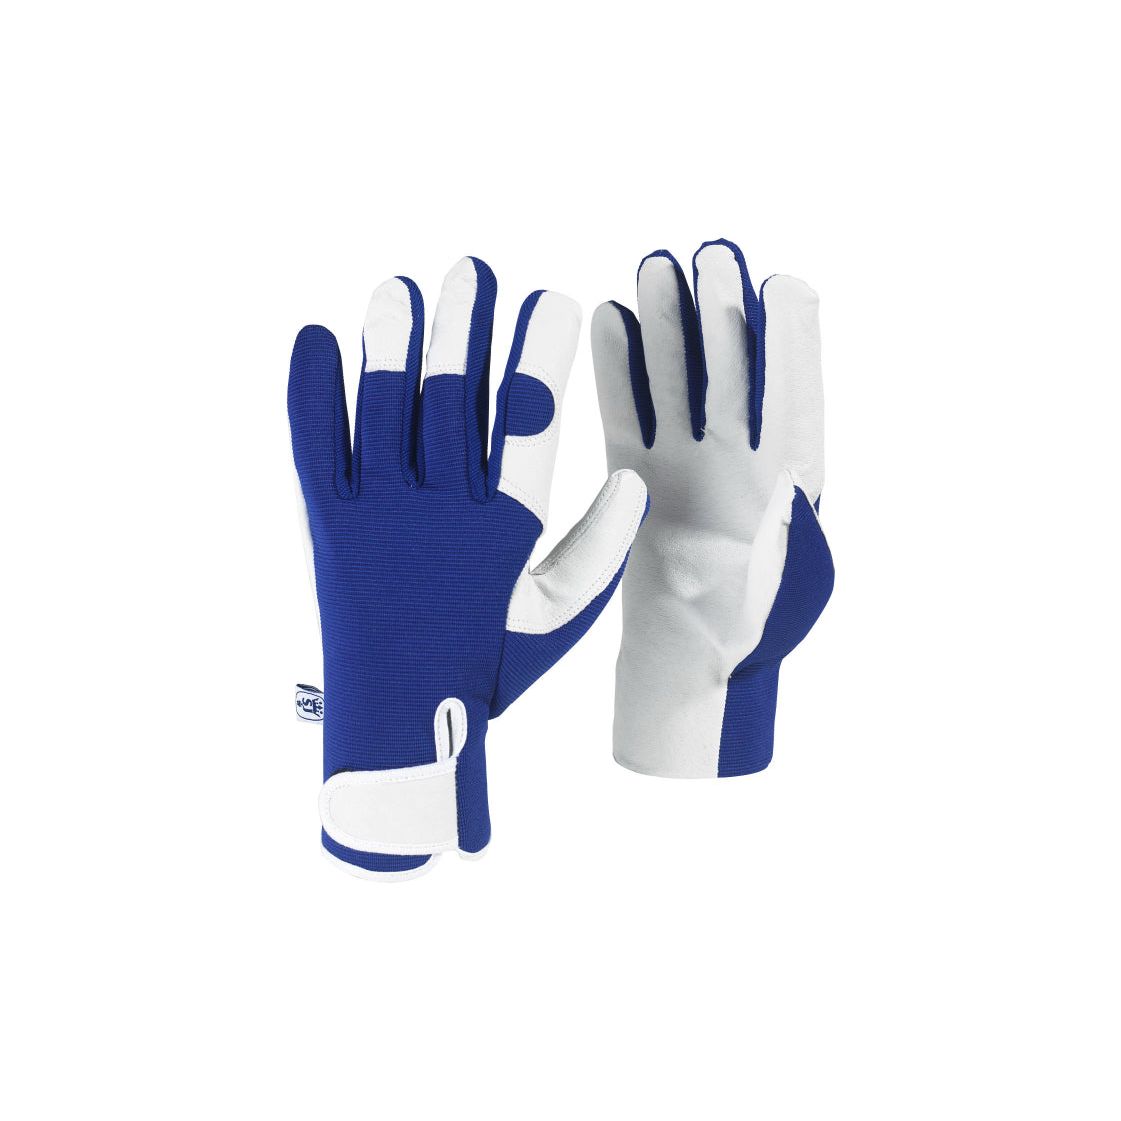 Spear and Jackson Kew Gardens Collection Multi-Purpose Gardening Gloves, Blue - Medium